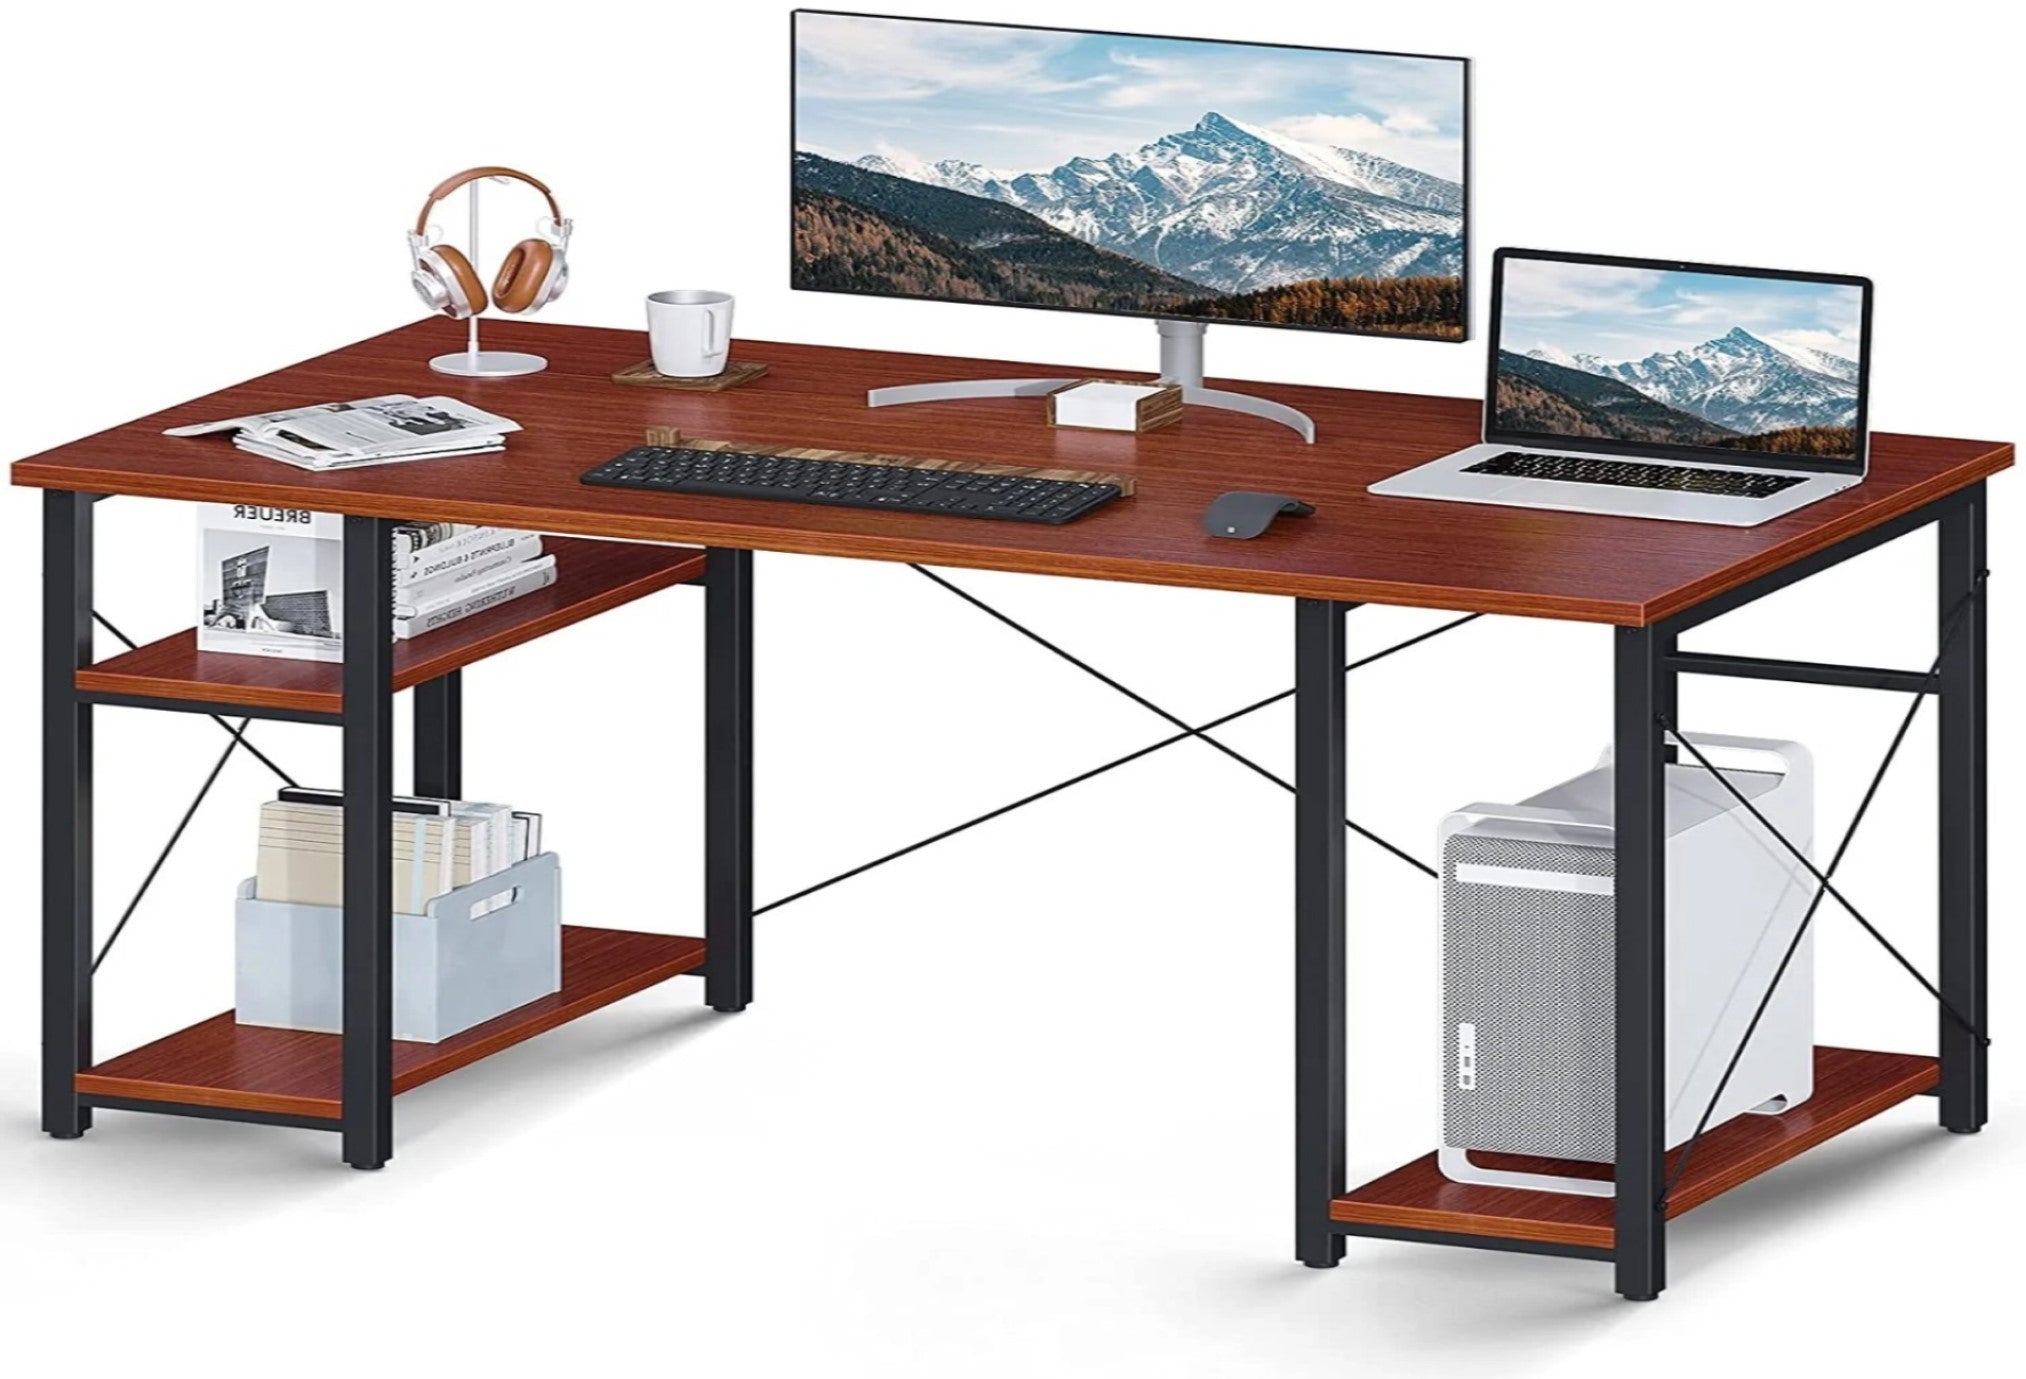 Computer Table Design, Modern Computer Table Design, Computer Table Design For Home!